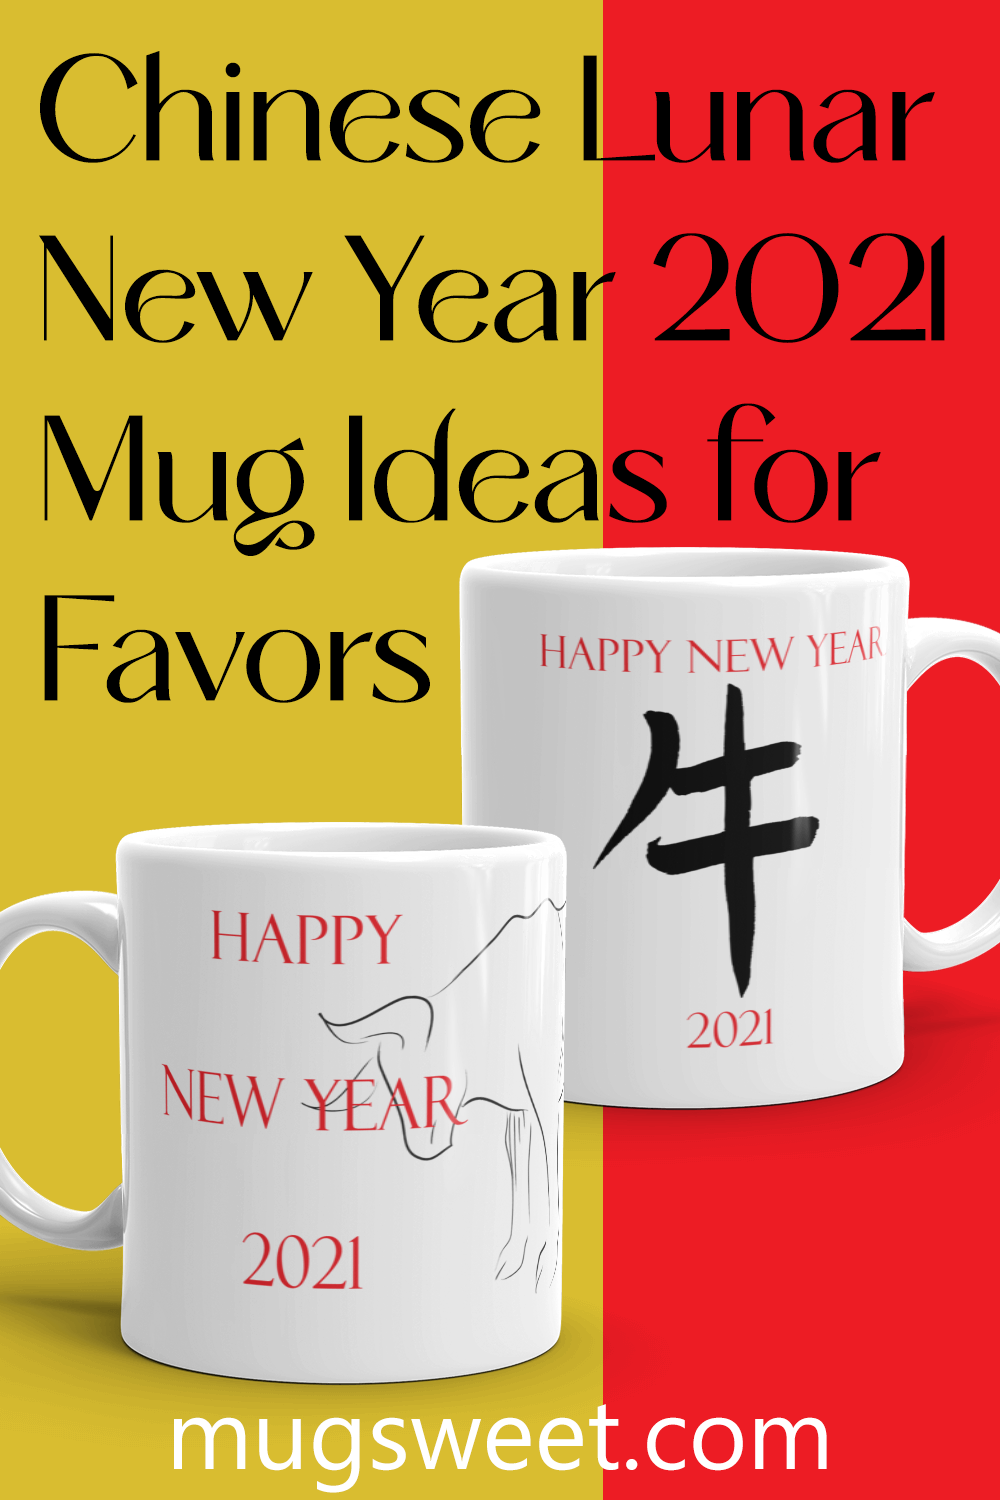 Chinese New Year Mugs - Lunar New Year 2021